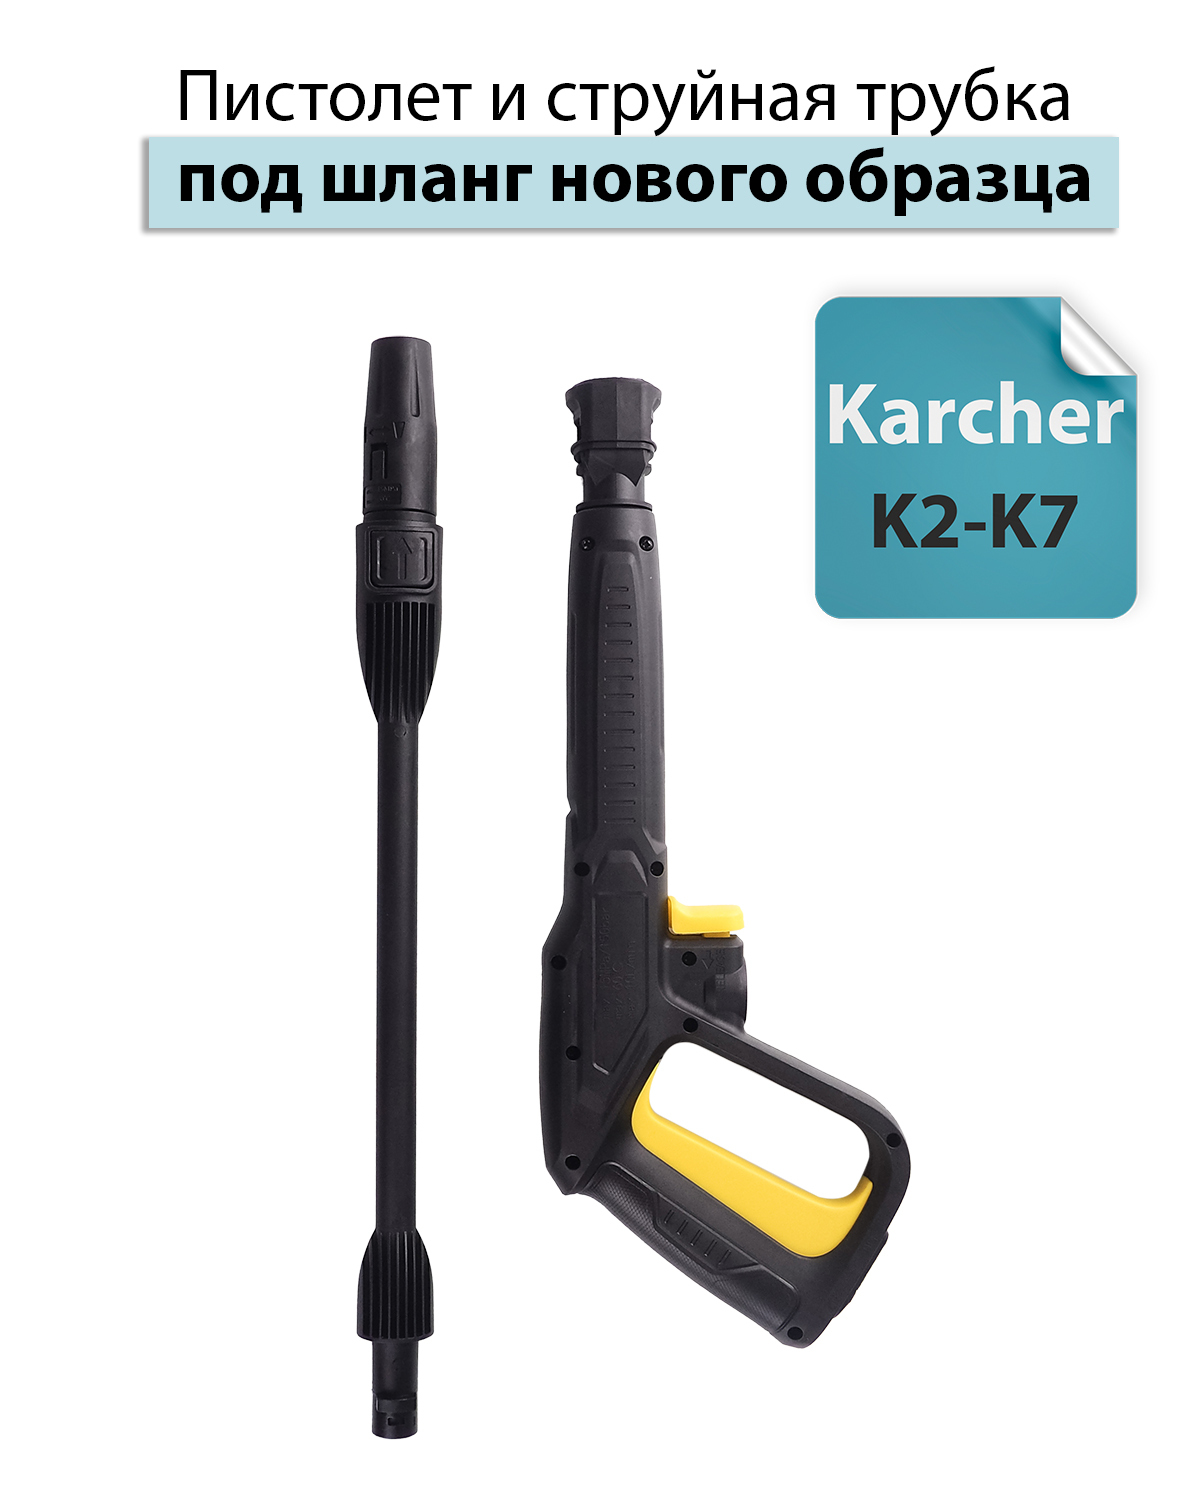 Пистолет для Karcher () K2-K7 в сборе (аналог) -  в .